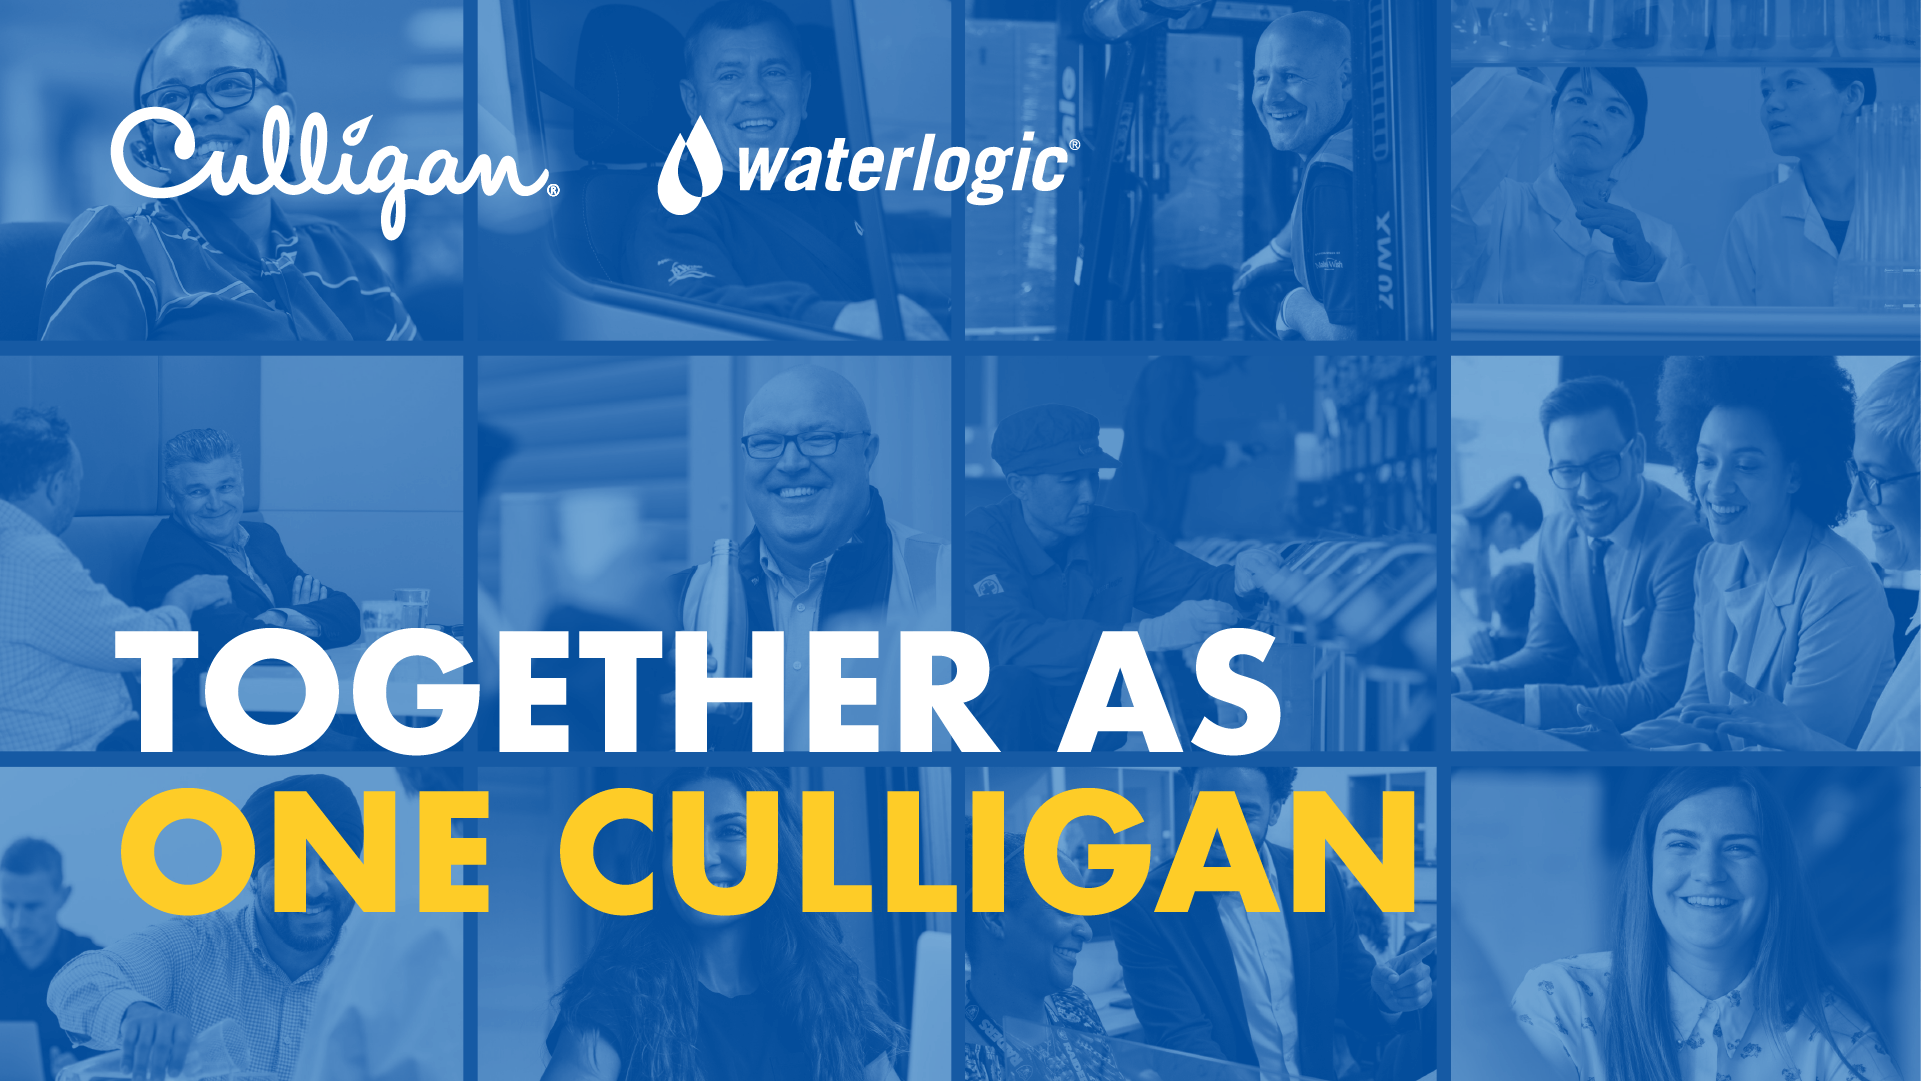 Culligan and Waterlogic 